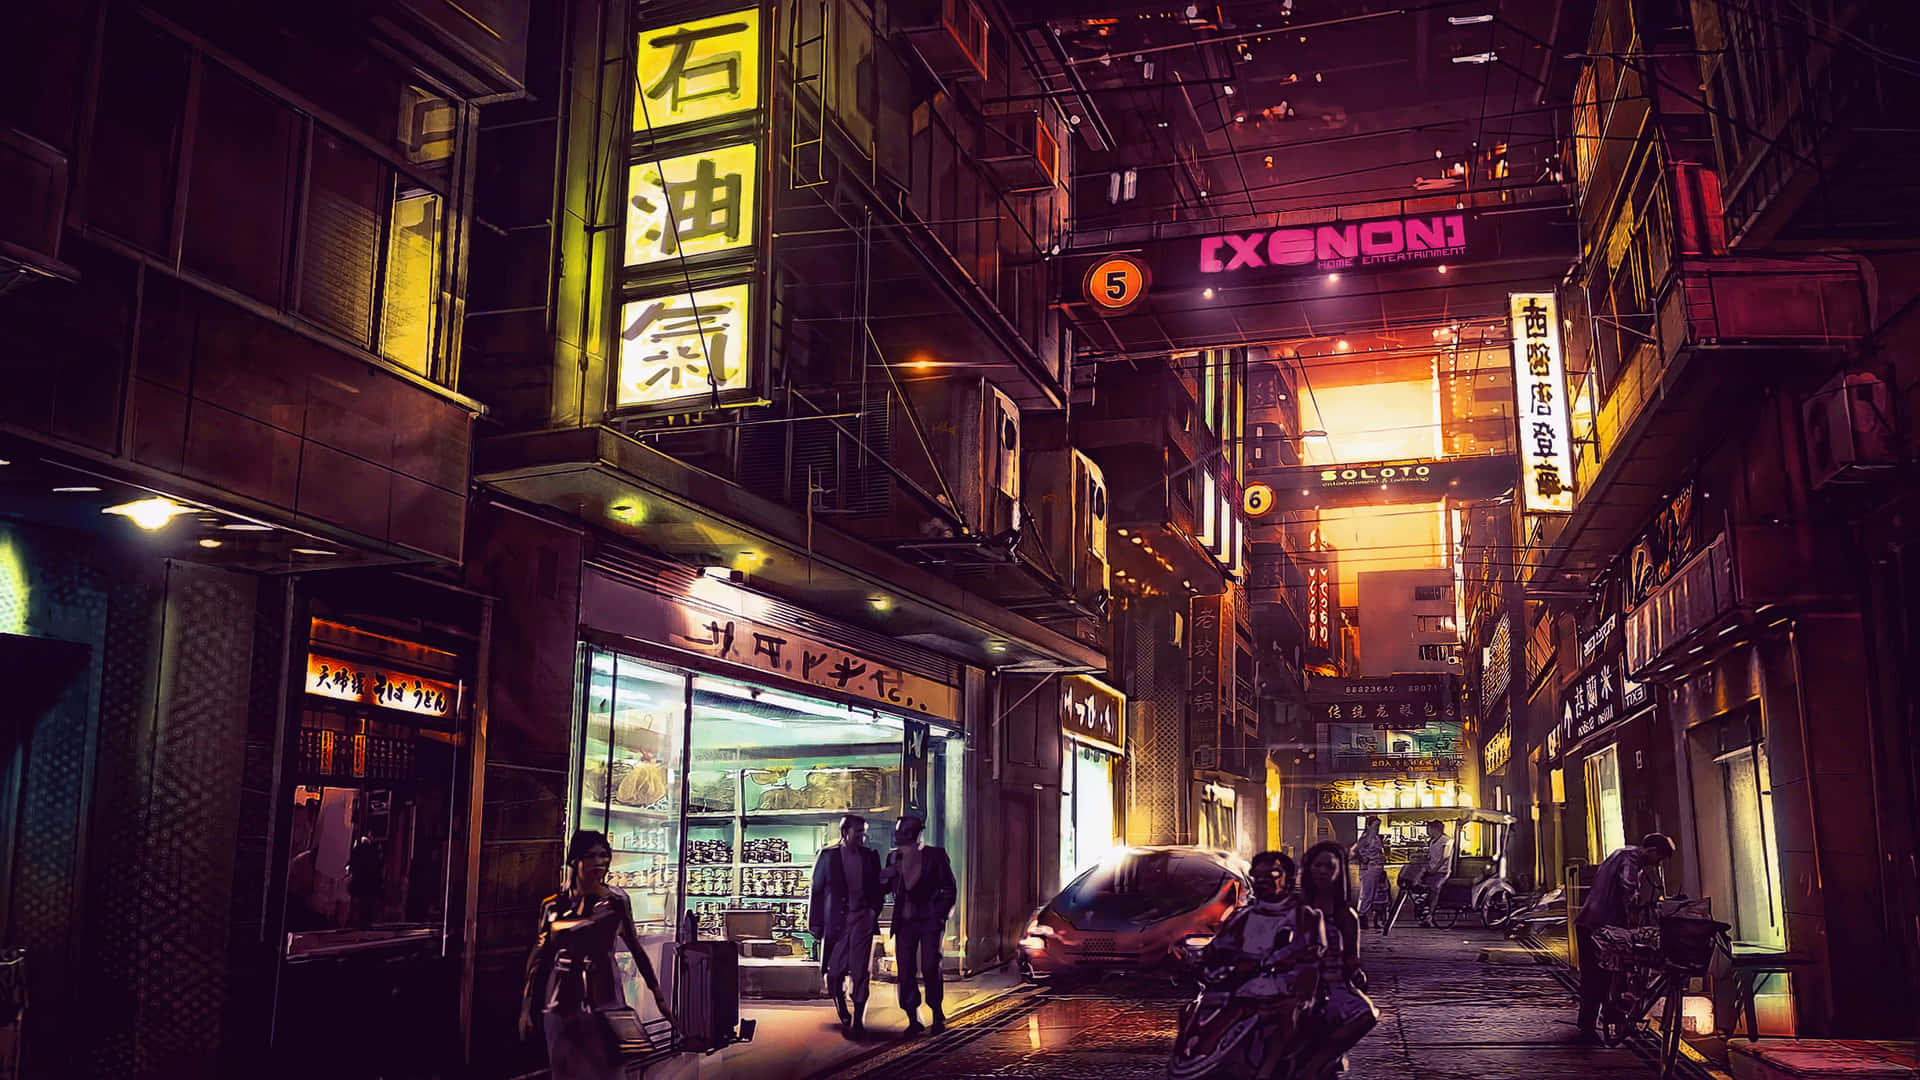 Explore the bustling metropolis of Cyberpunk City